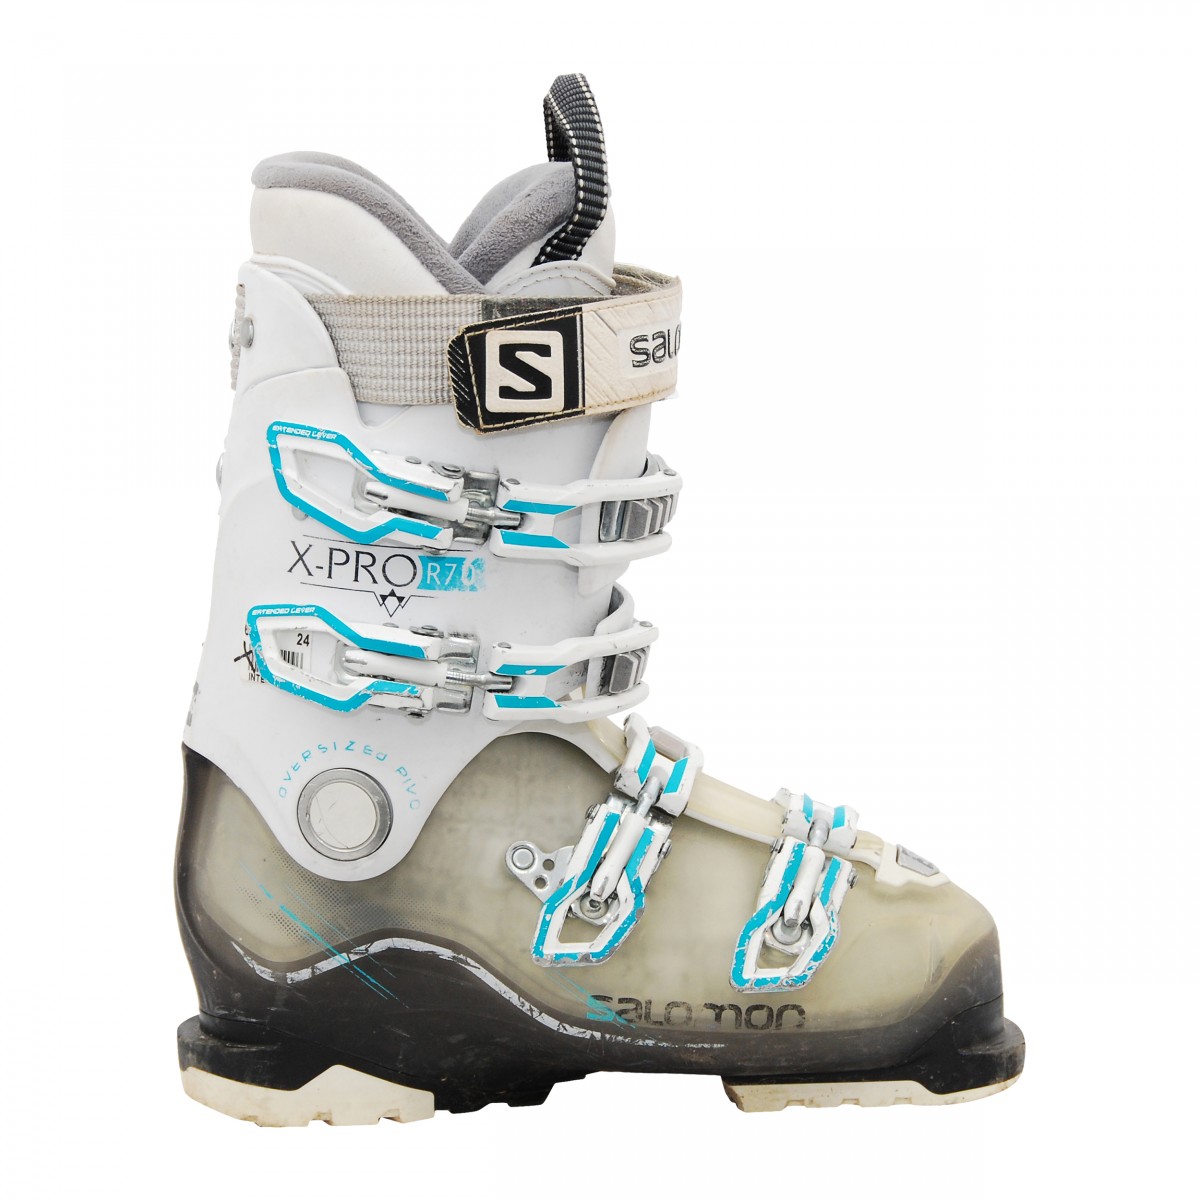 Used ski boot Salomon r70w black blue